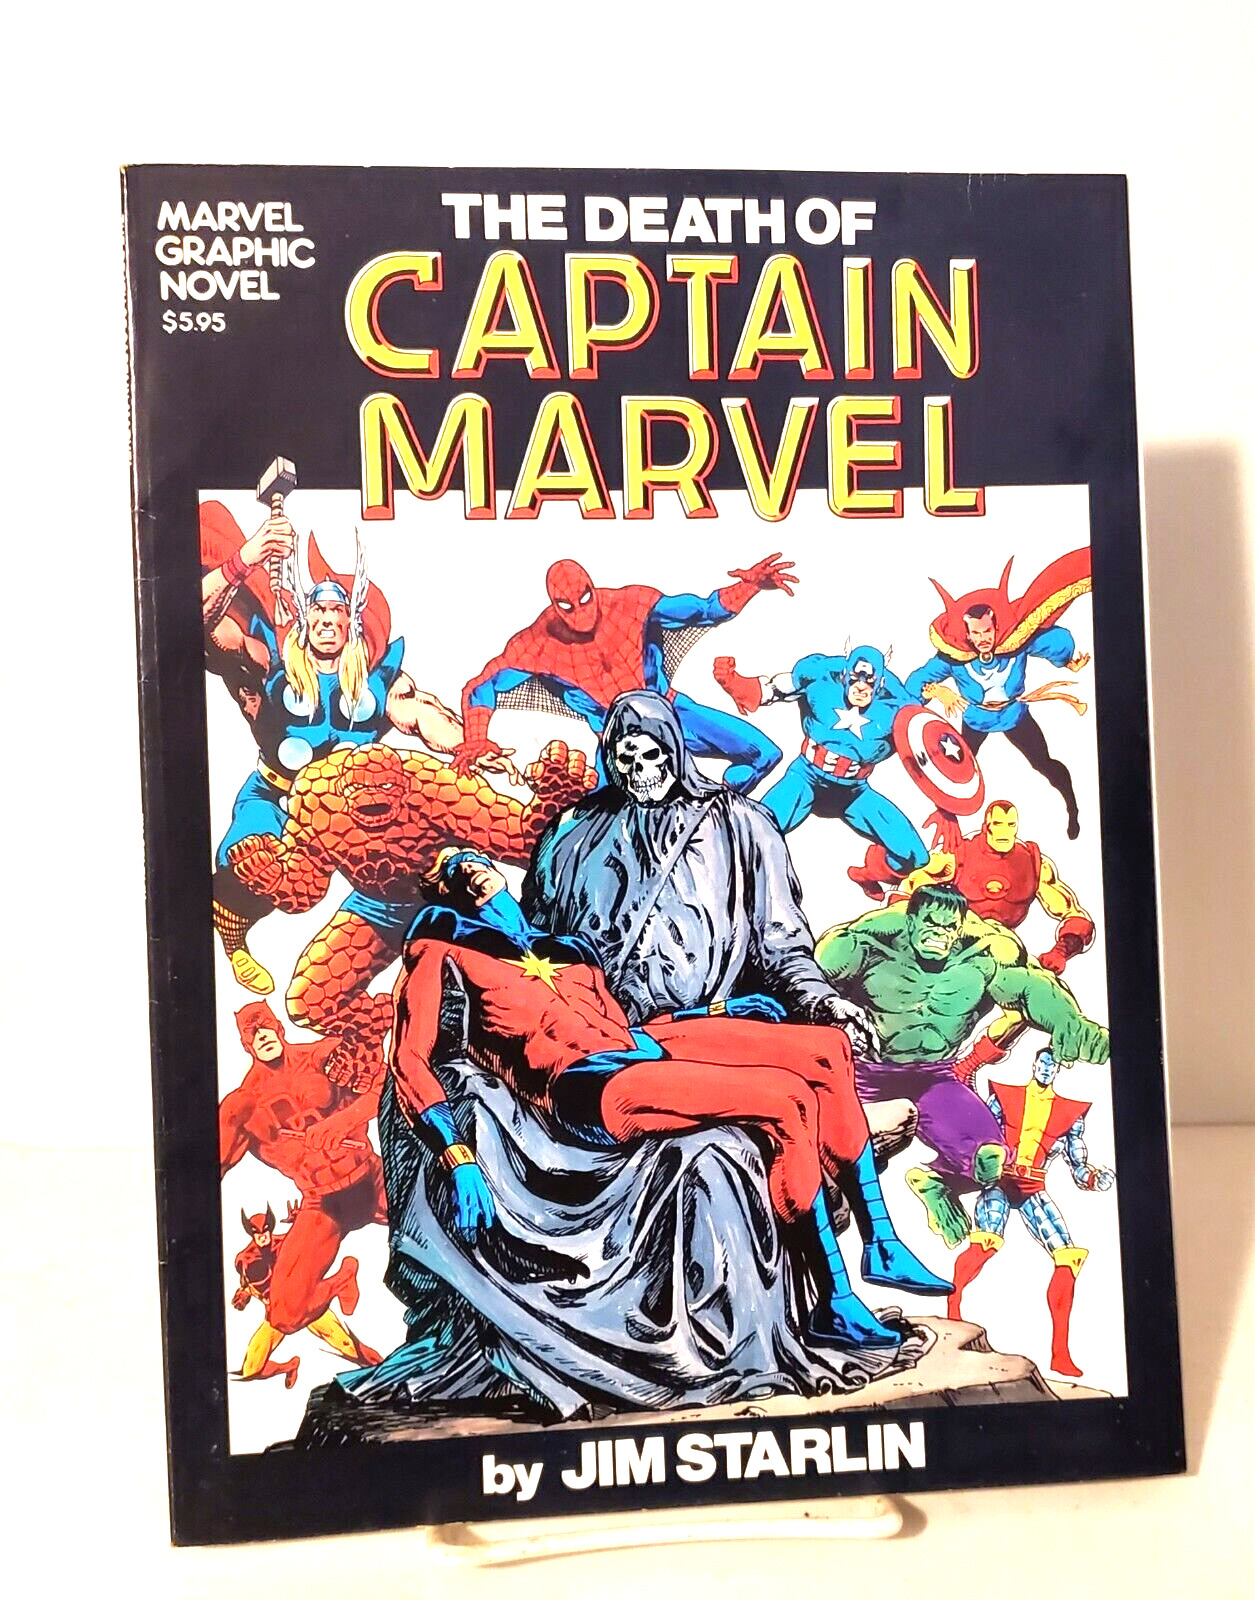 THE DEATH OF CAPTAIN MARVEL, Jim Starlin, Graphic Novel, Marvel Comics